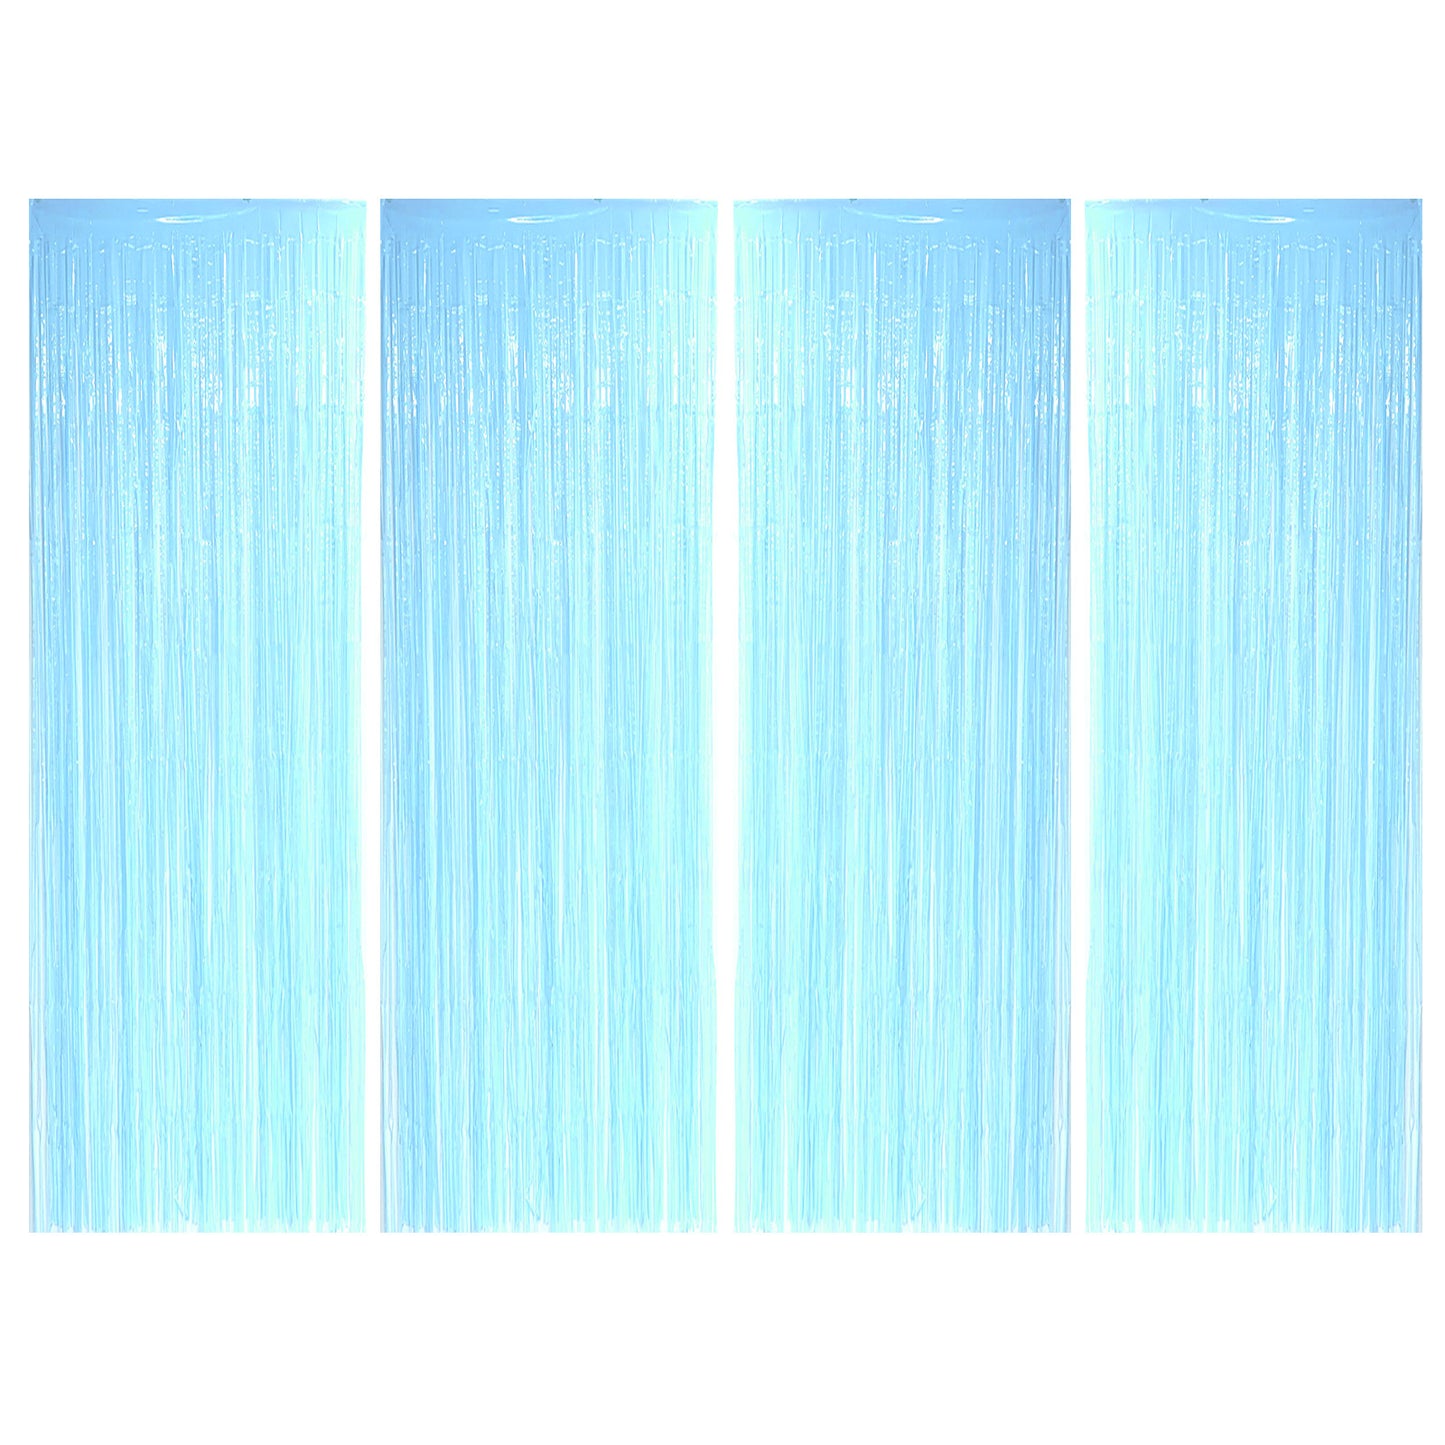 Allgala Back Drop 4PK (3x1 M) 9.7FT x 3.2FT Metalic Tinsel Party Photo Backdrop Curtains Door Fringe